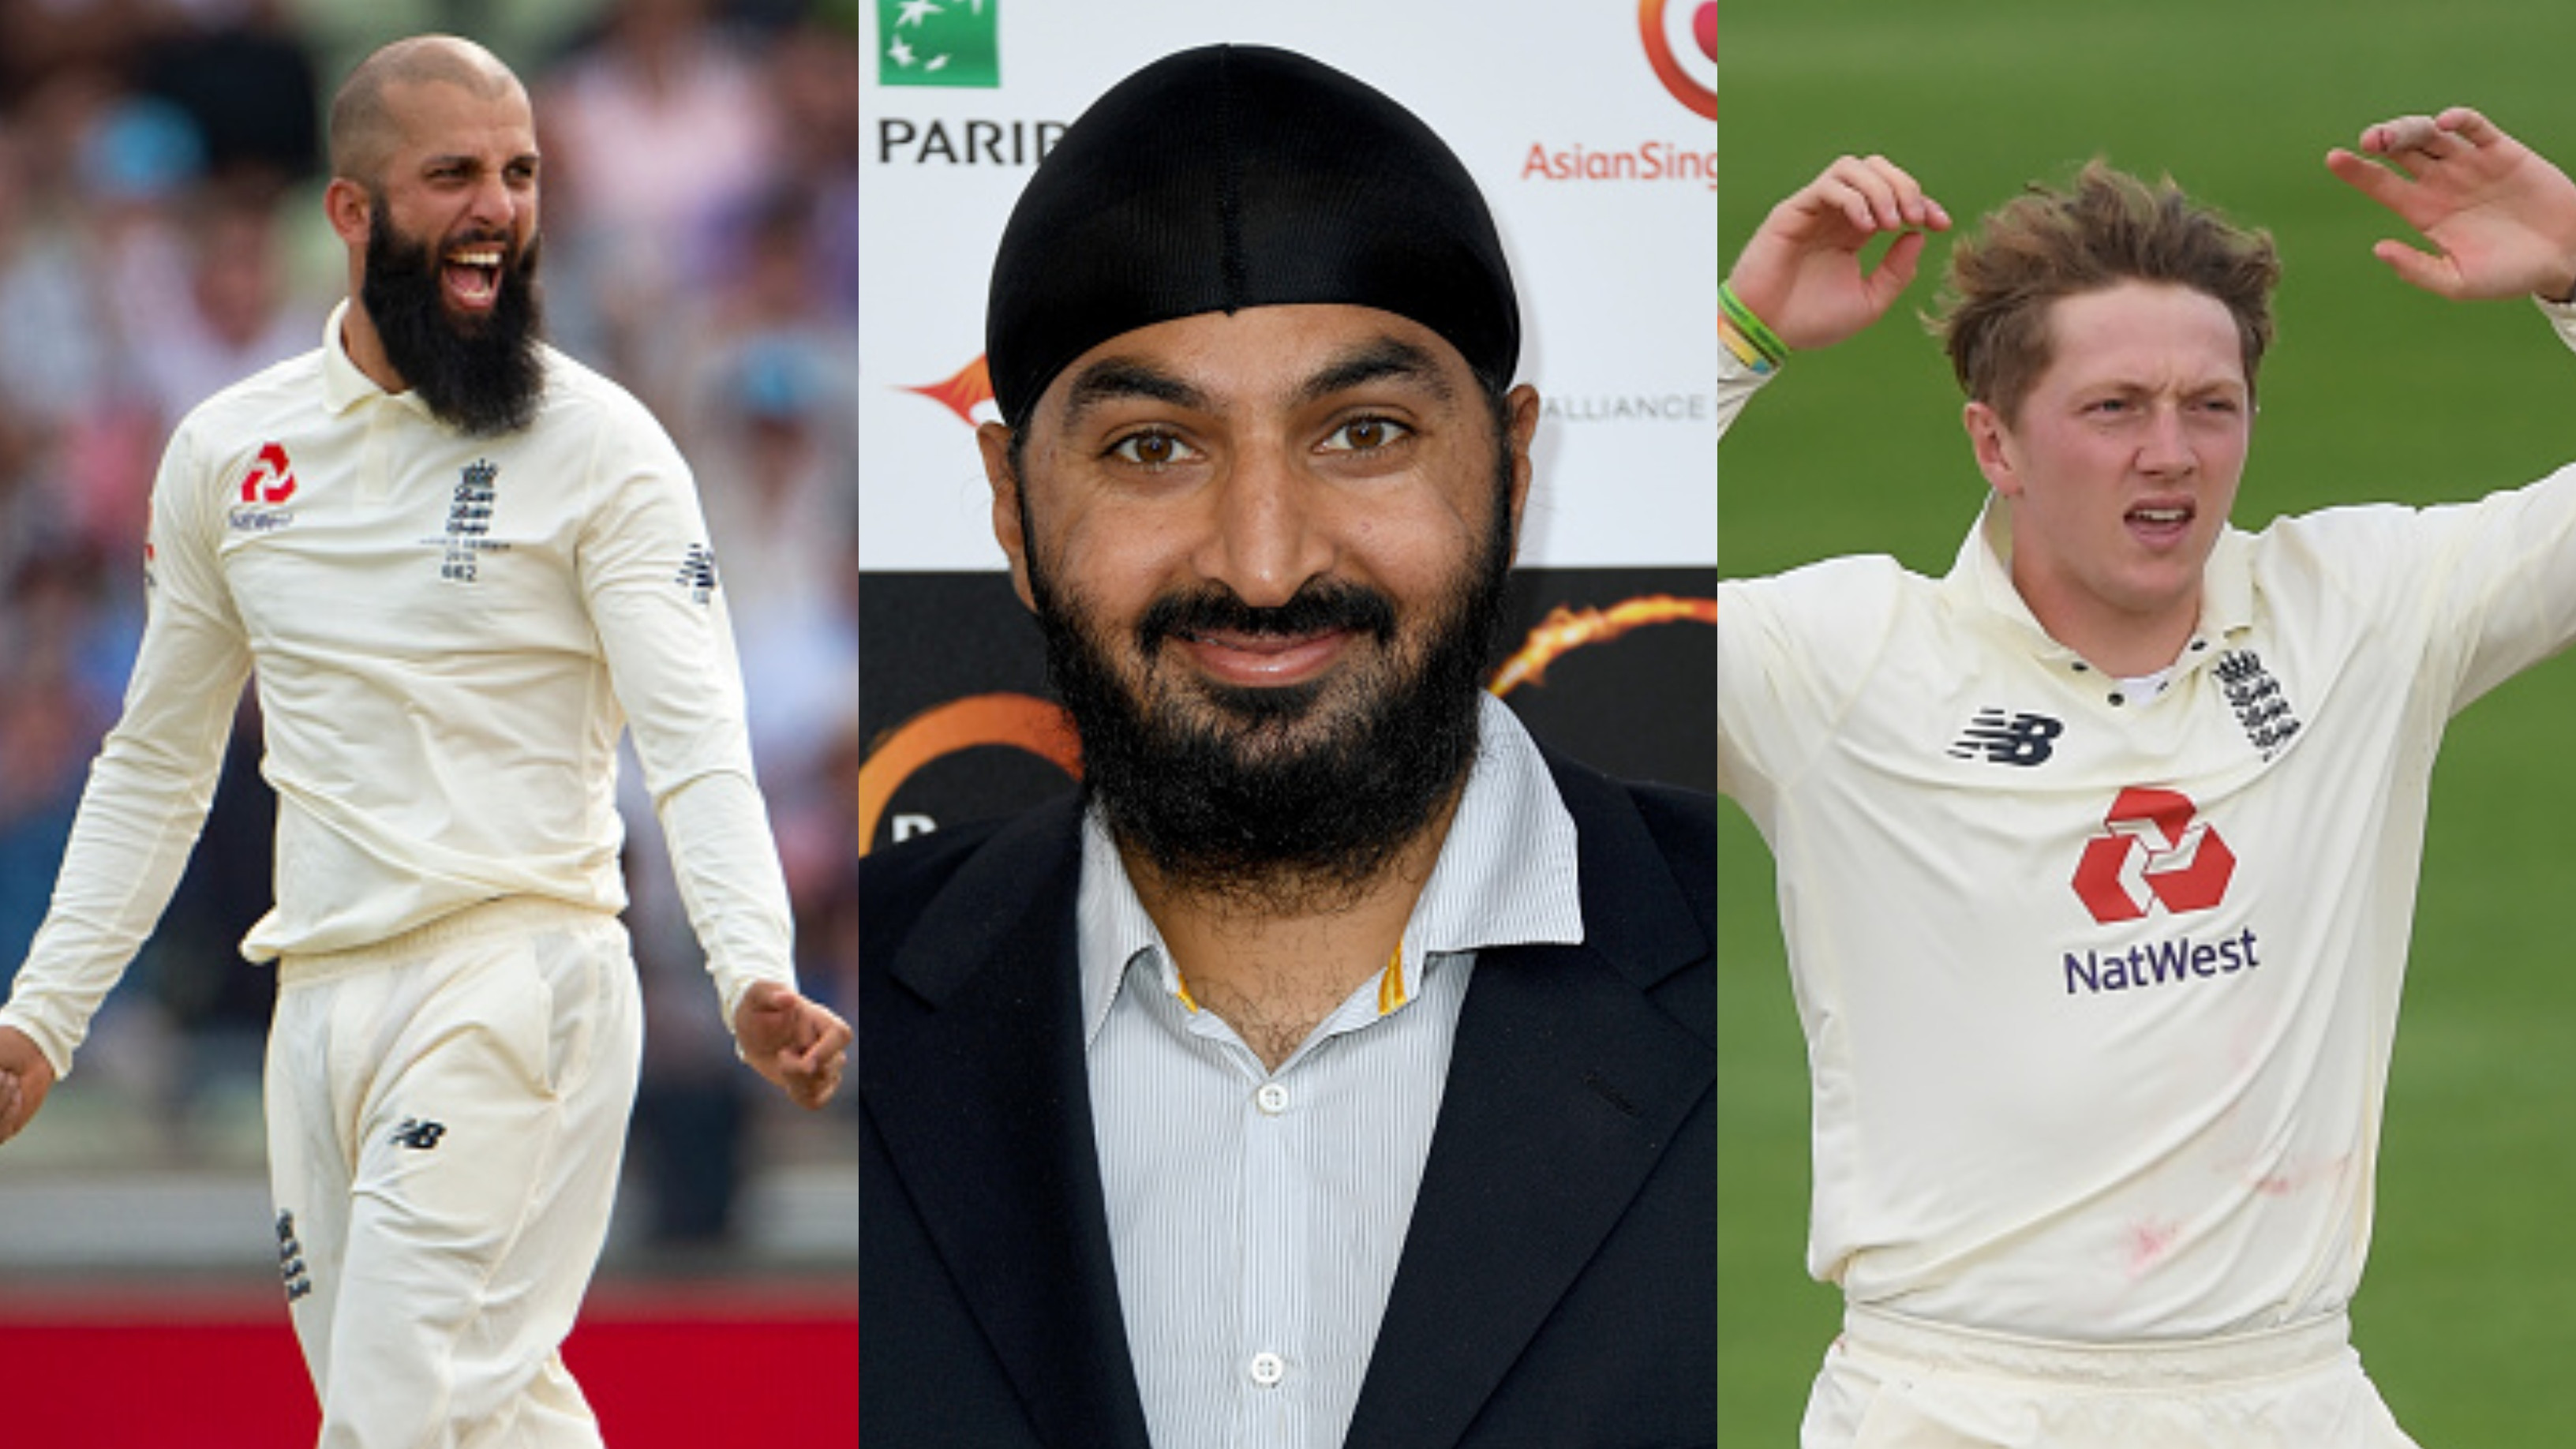 IND v ENG 2021: Monty Panesar picks Moeen Ali over Dom Bess as England's second spinner in 1st Test